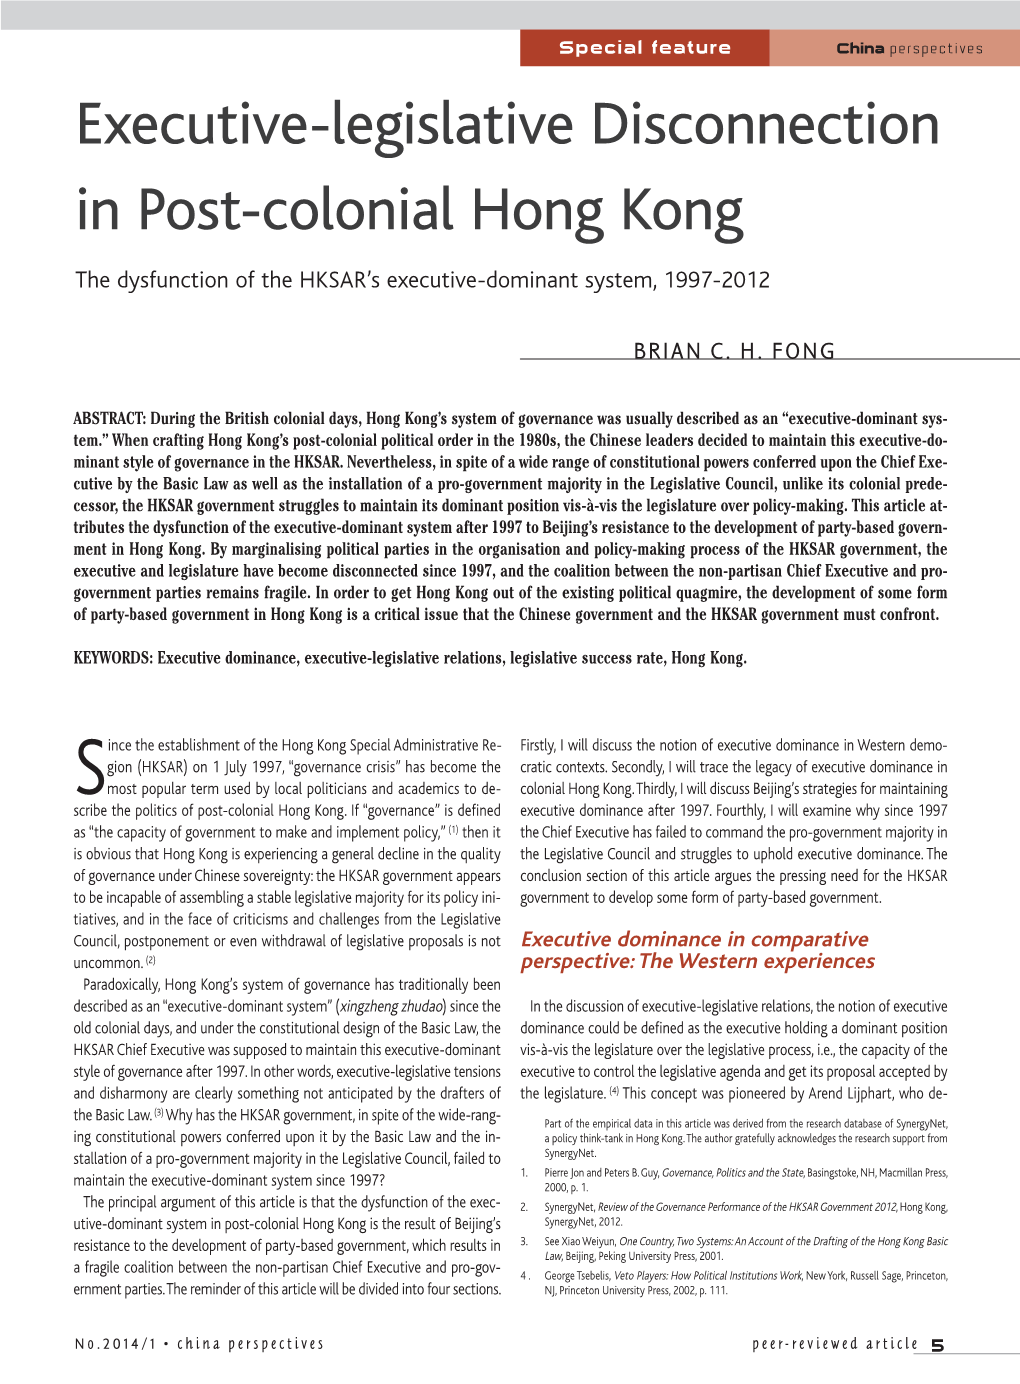 Executive-Legislative Disconnection in Post-Colonial Hong Kong